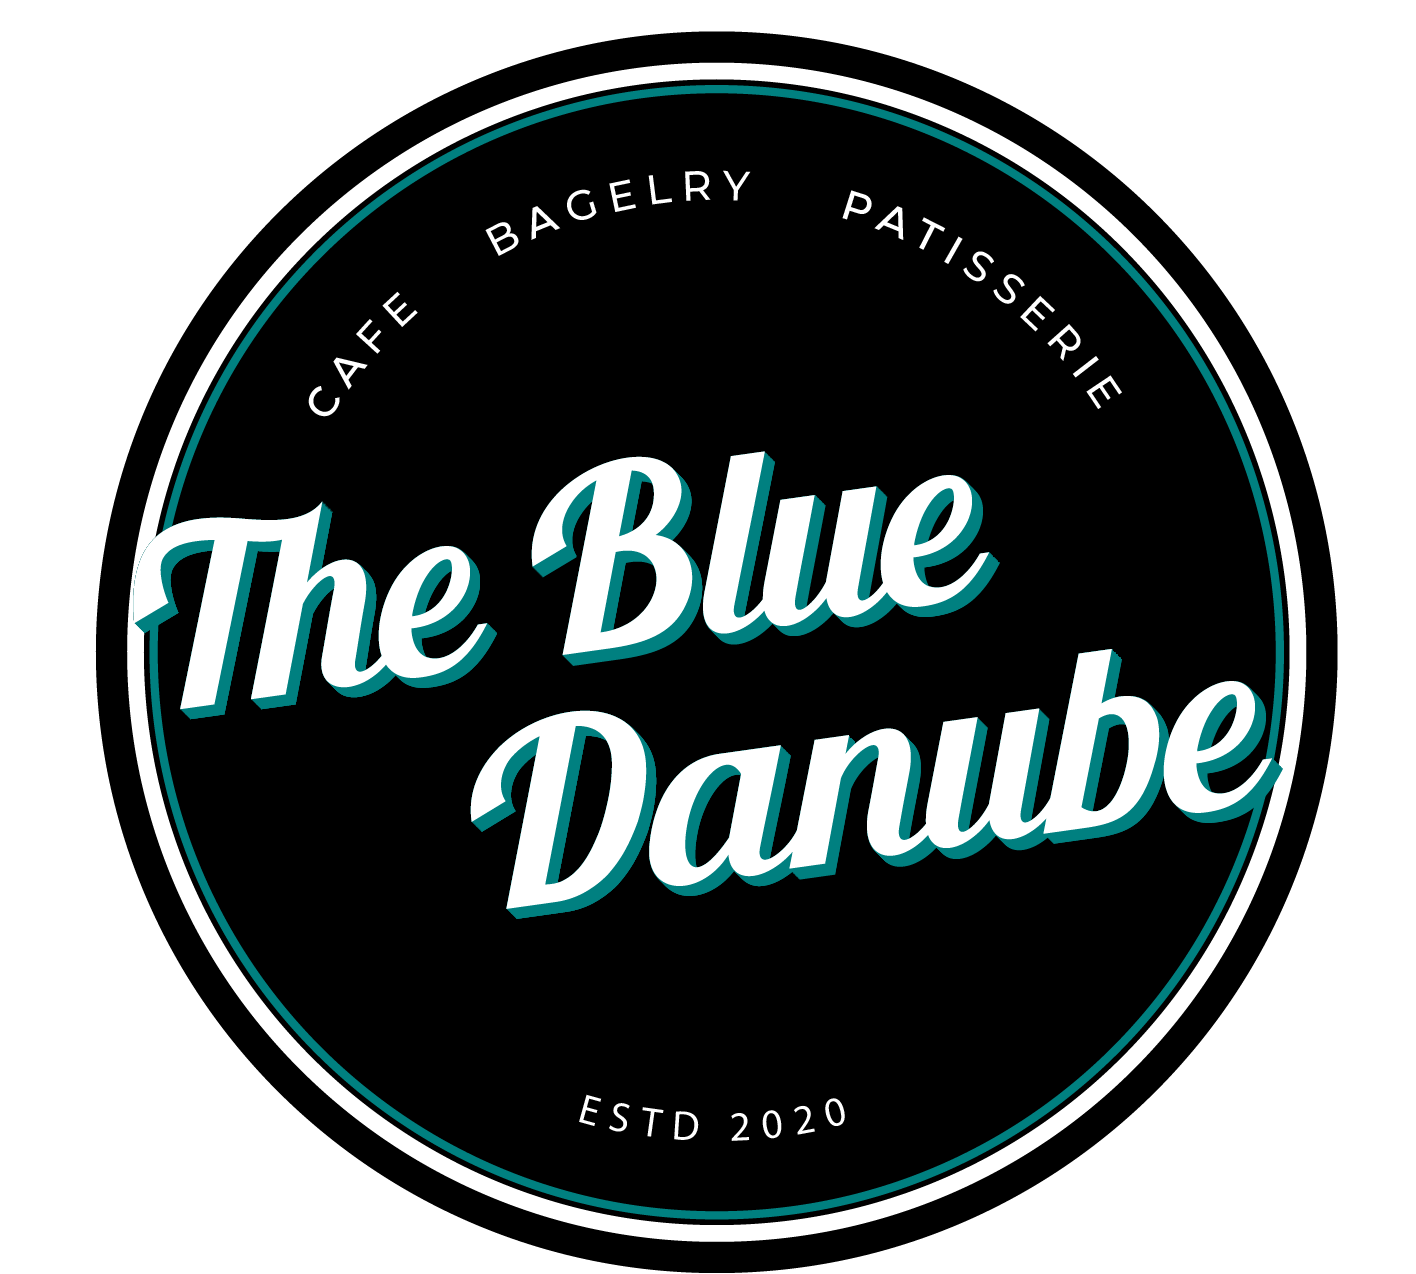 The Blue Danube - Sector 142 online delivery in Noida, Delhi, NCR,
                    Gurgaon